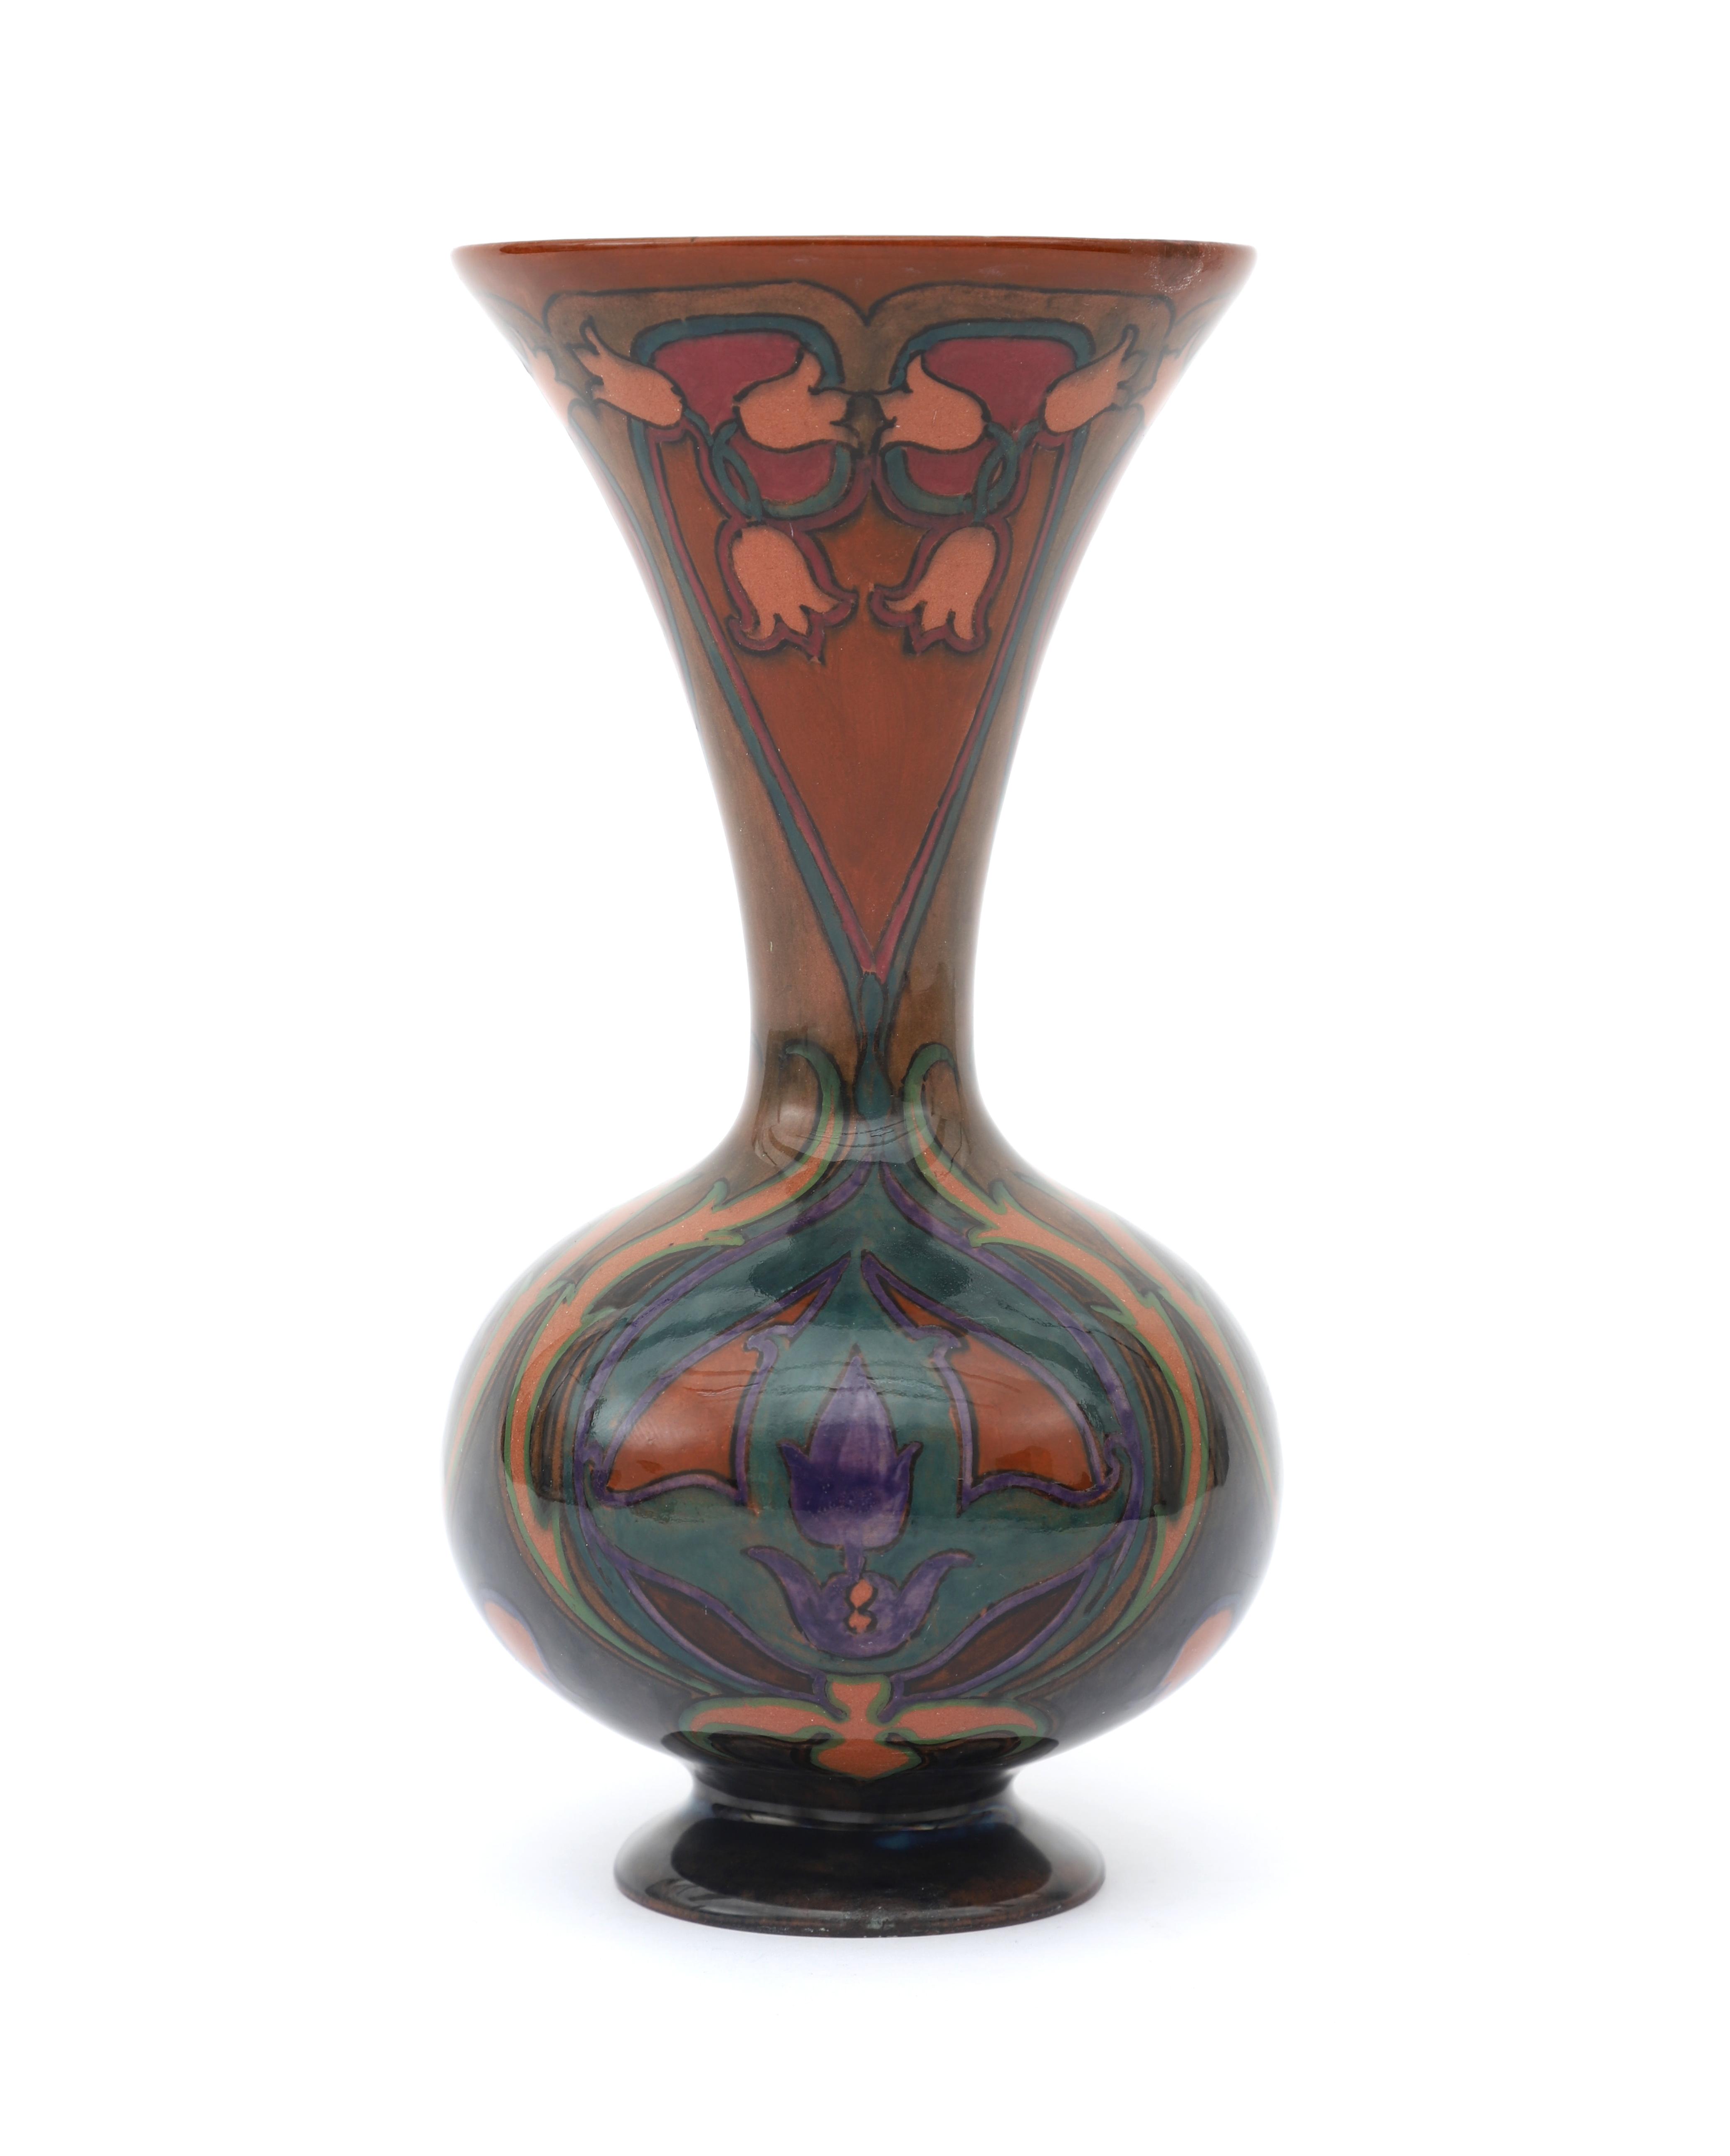 N.V. Haagsche Plateelfabriek Rozenburg, Den Haag (1883-1917) A ceramic vase with wide top rim, - Image 4 of 5